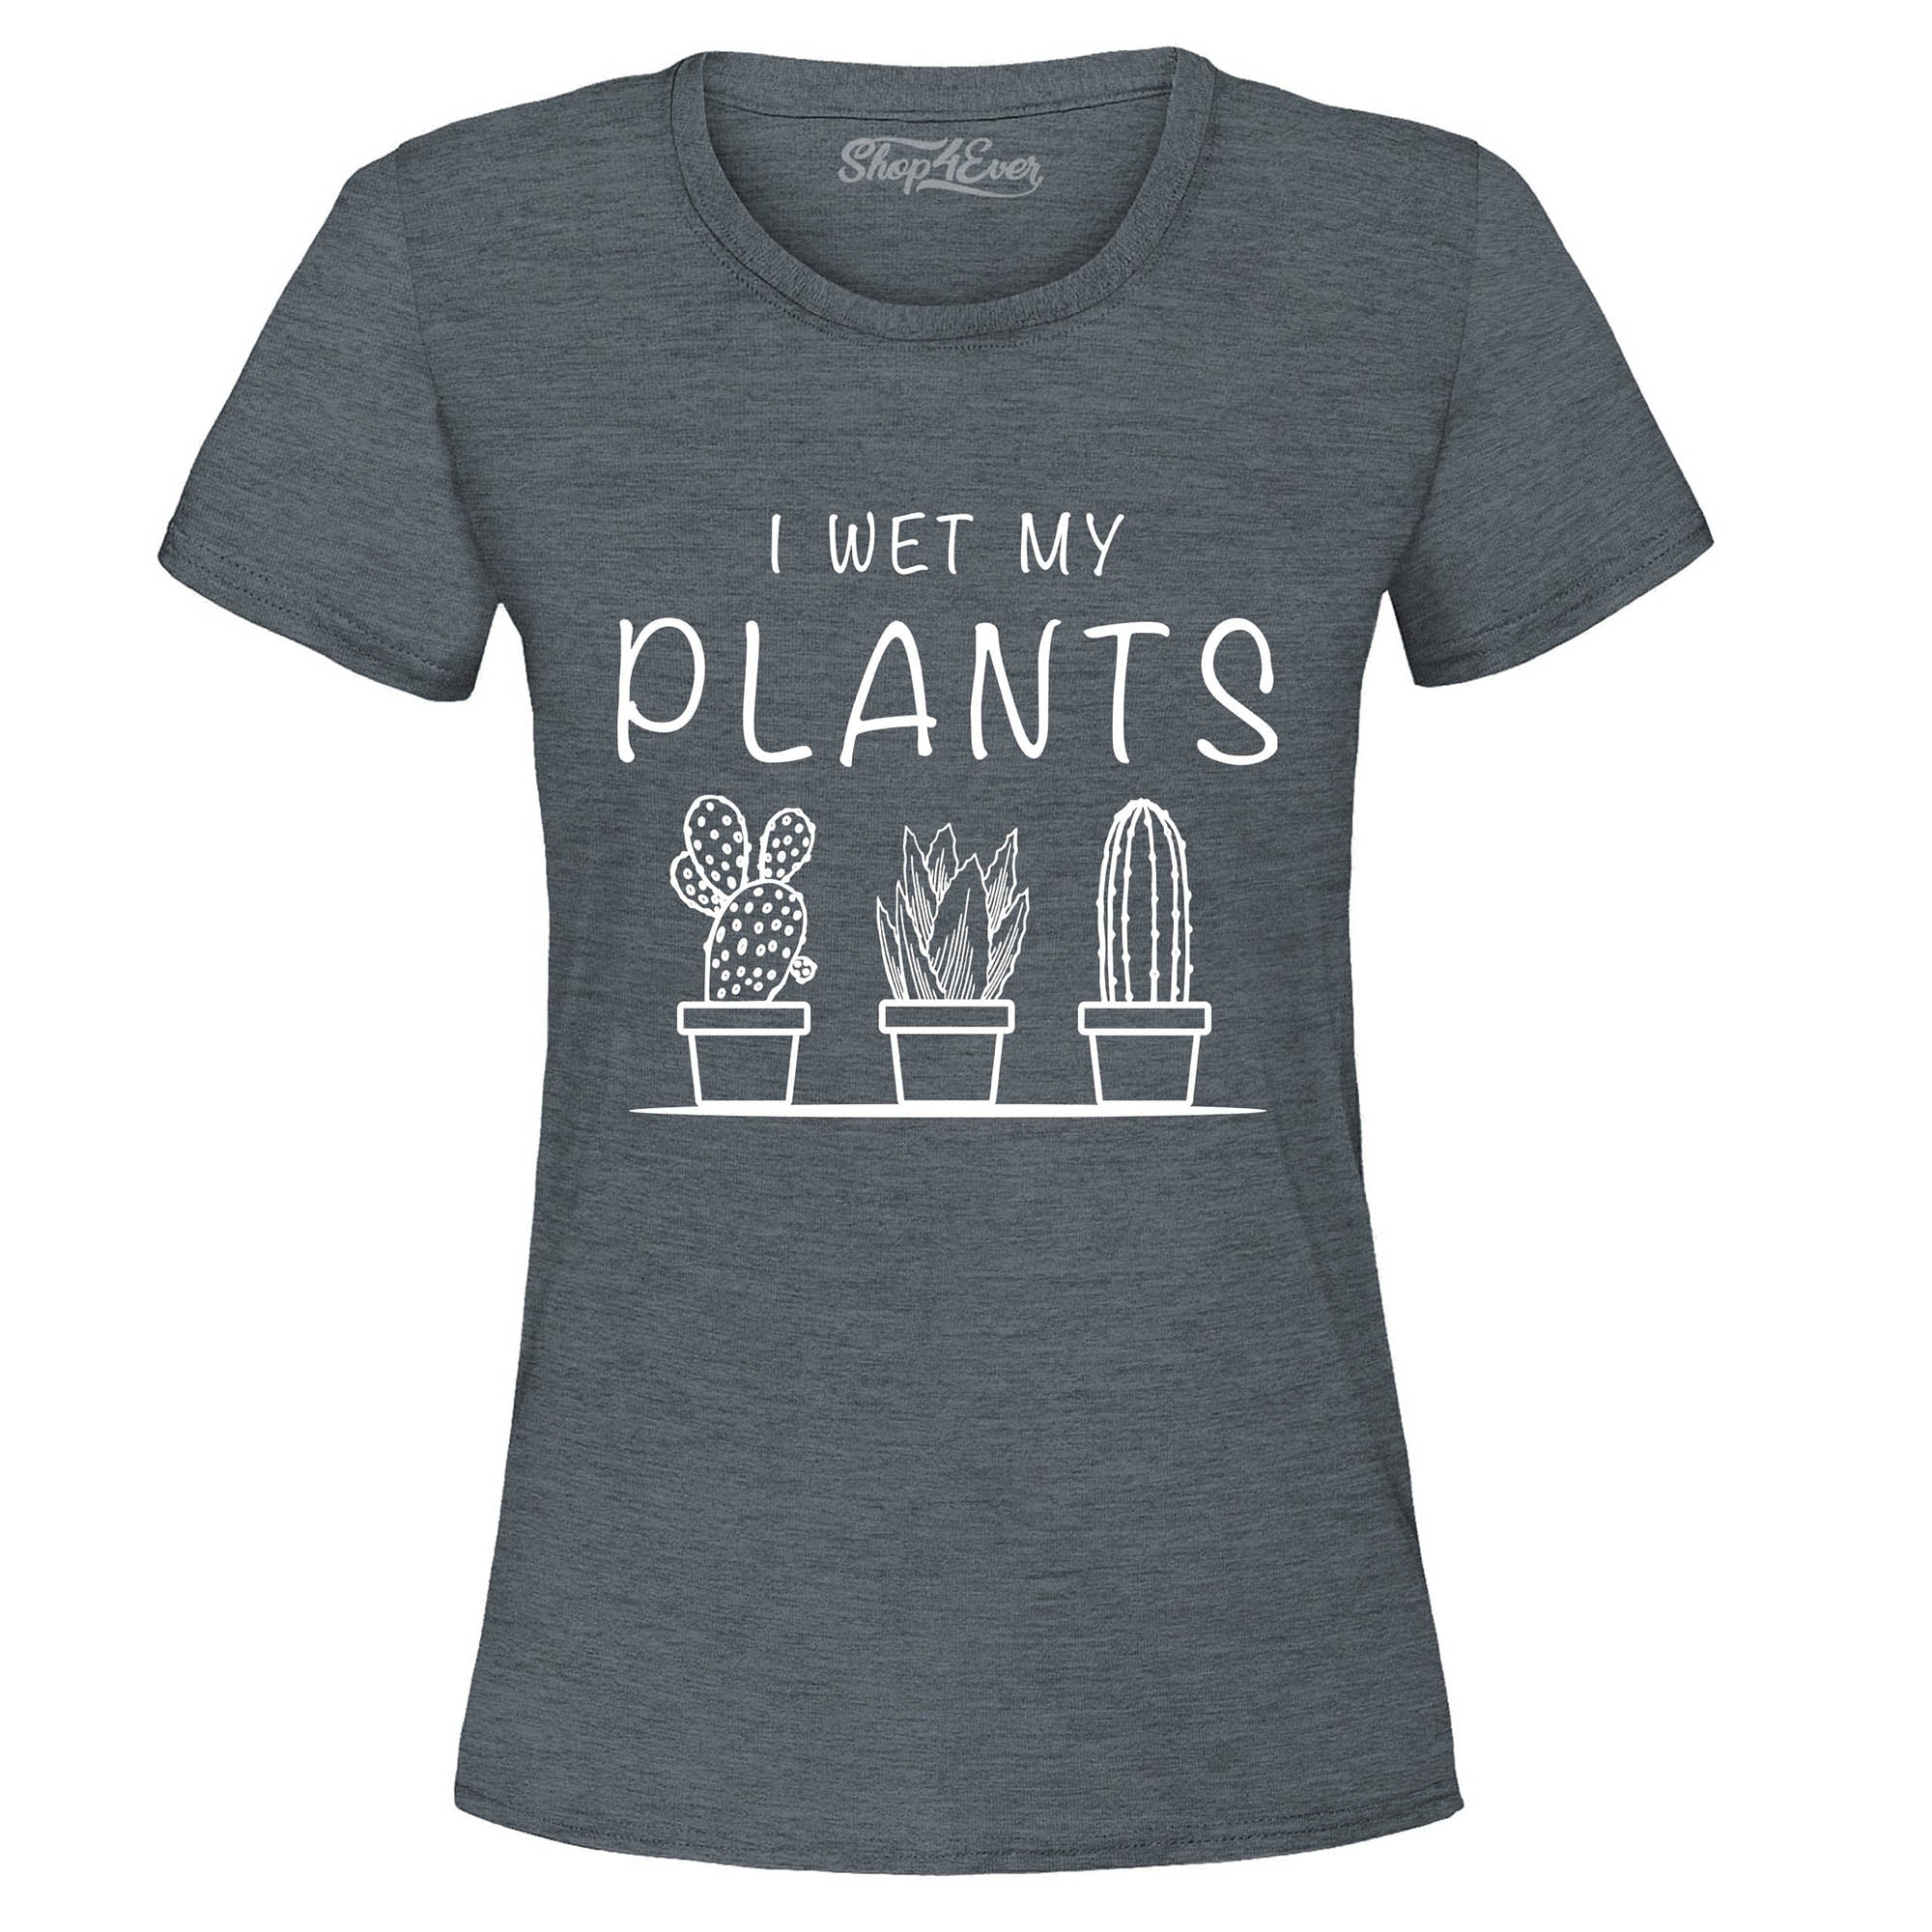 I Wet My Plants Tee Funny Plant Lady Women's T-Shirt